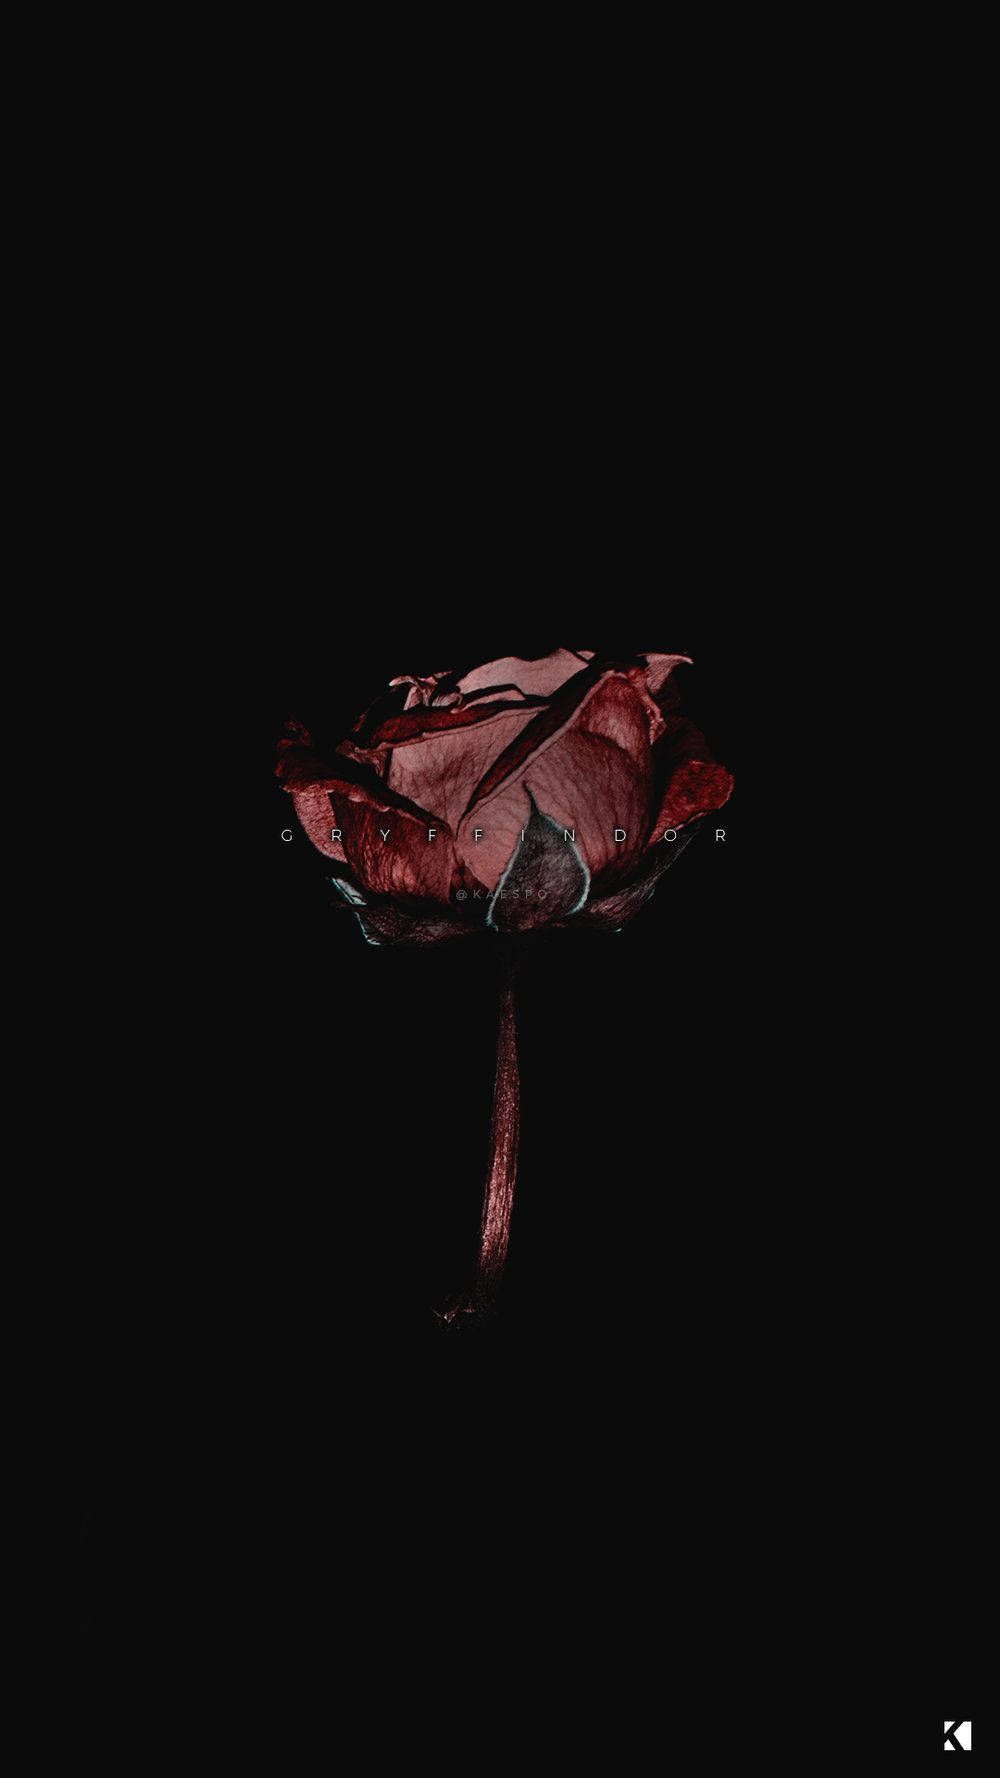 A single red rose in the dark - Blood, black rose, dark, roses